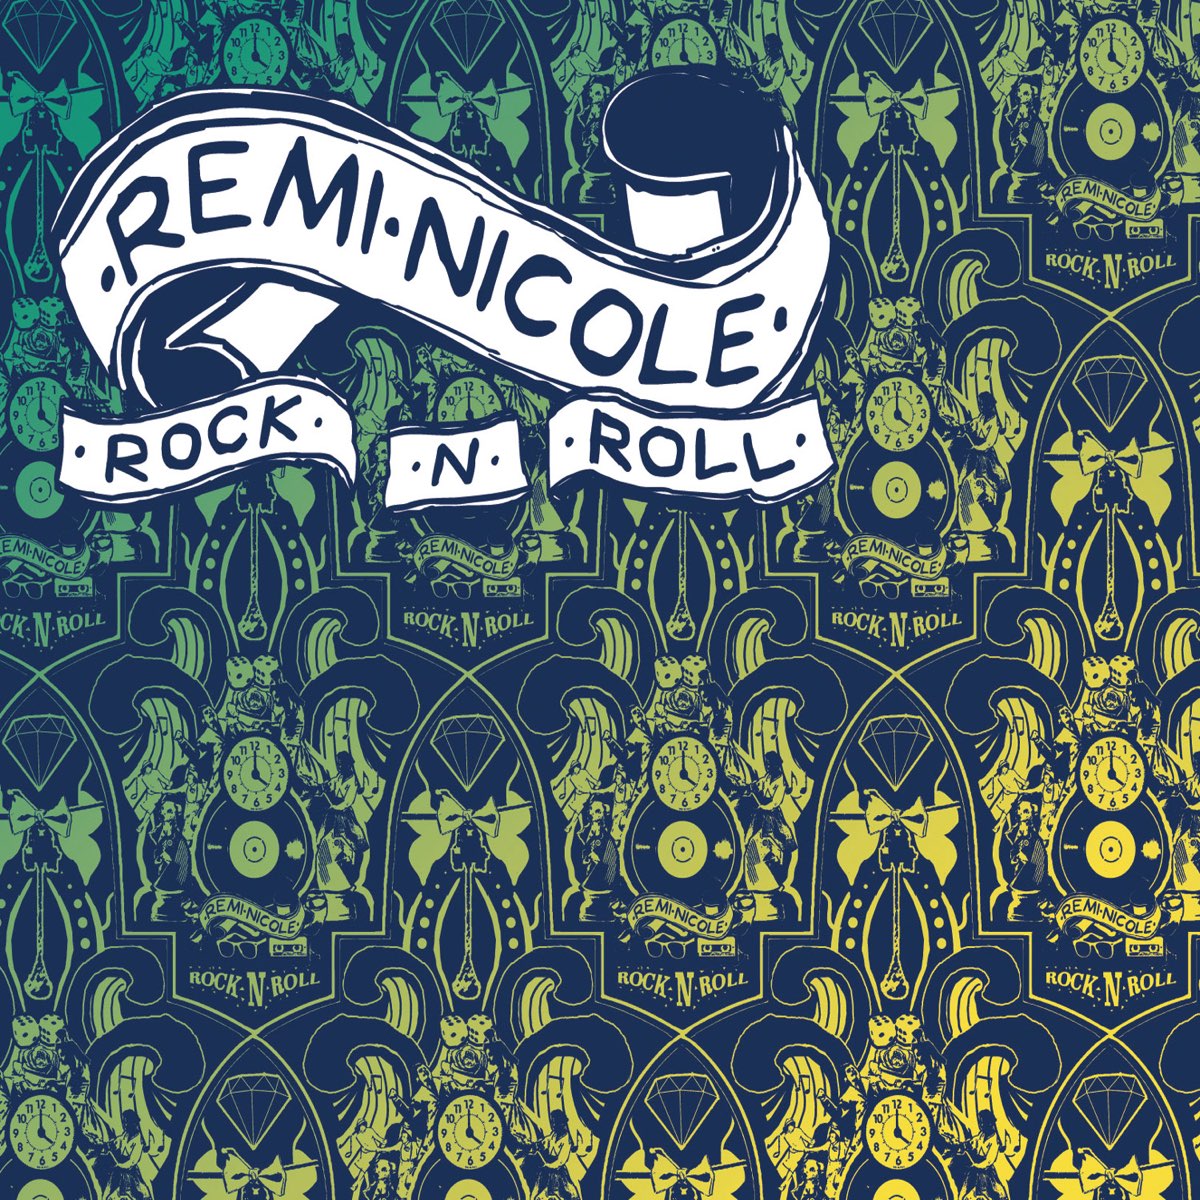 Remi Nicole — Rock n Roll cover artwork